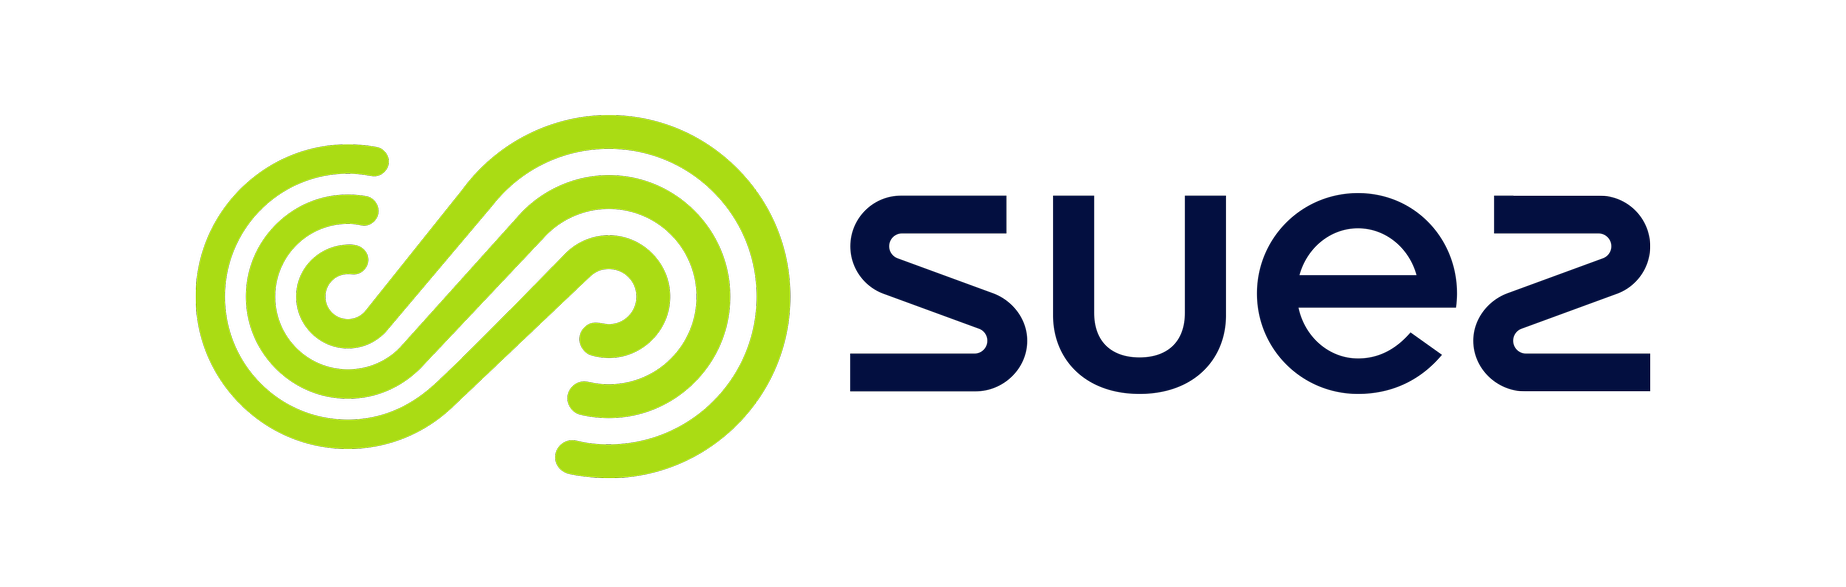 Logo Suez.png